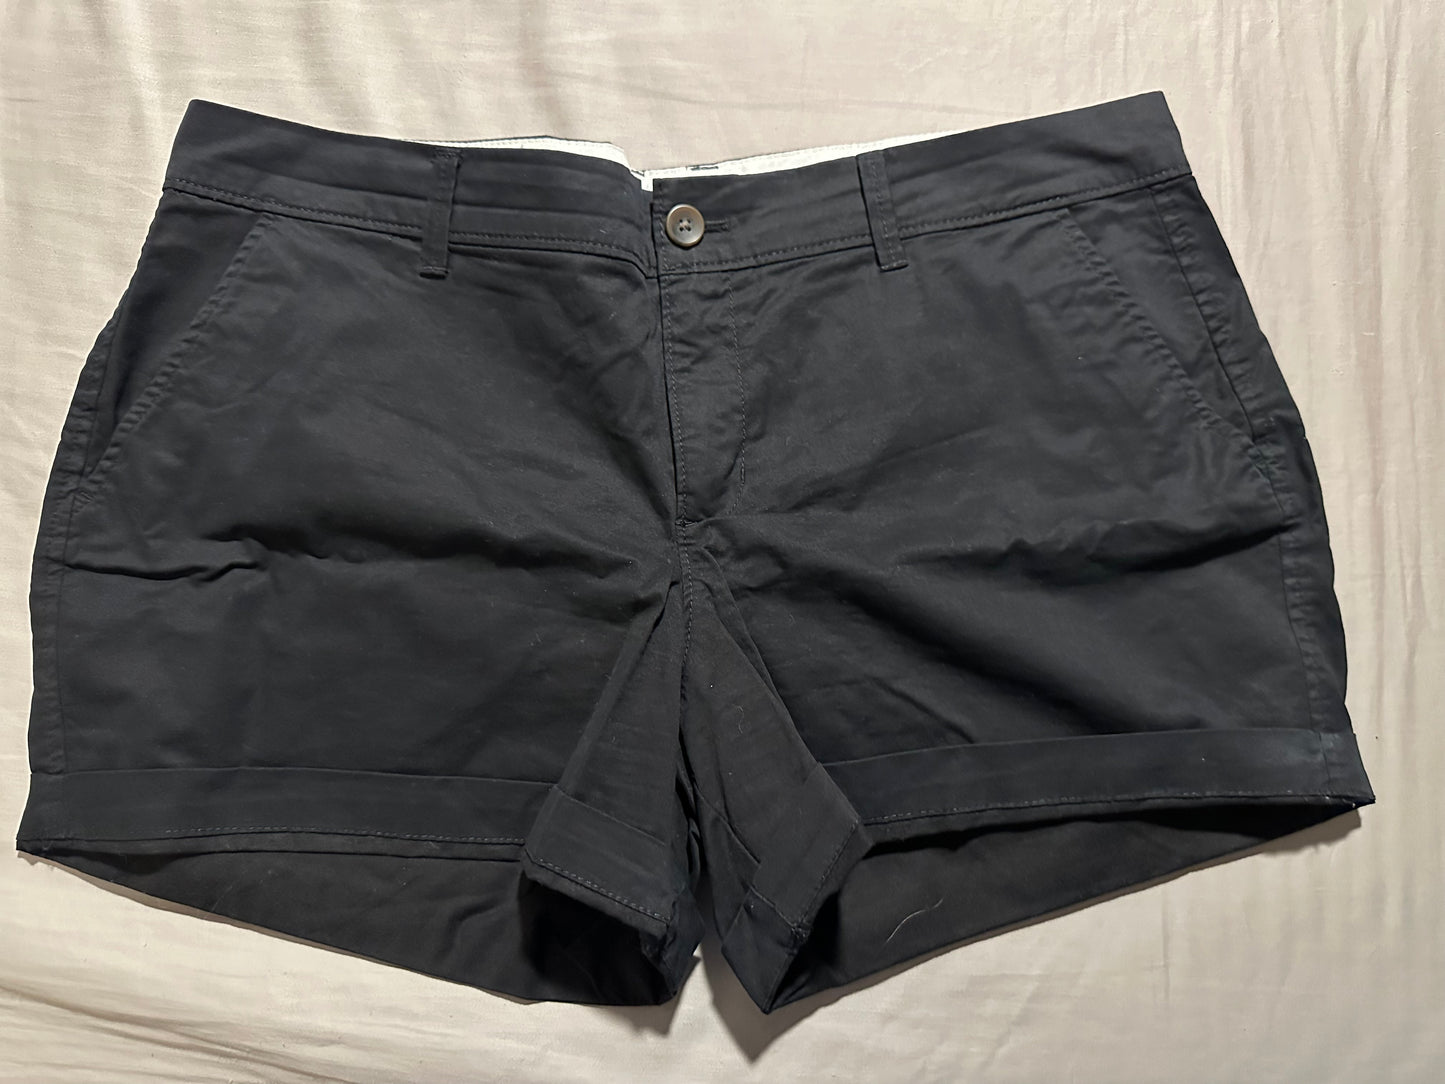 Old Navy size 12 shorts